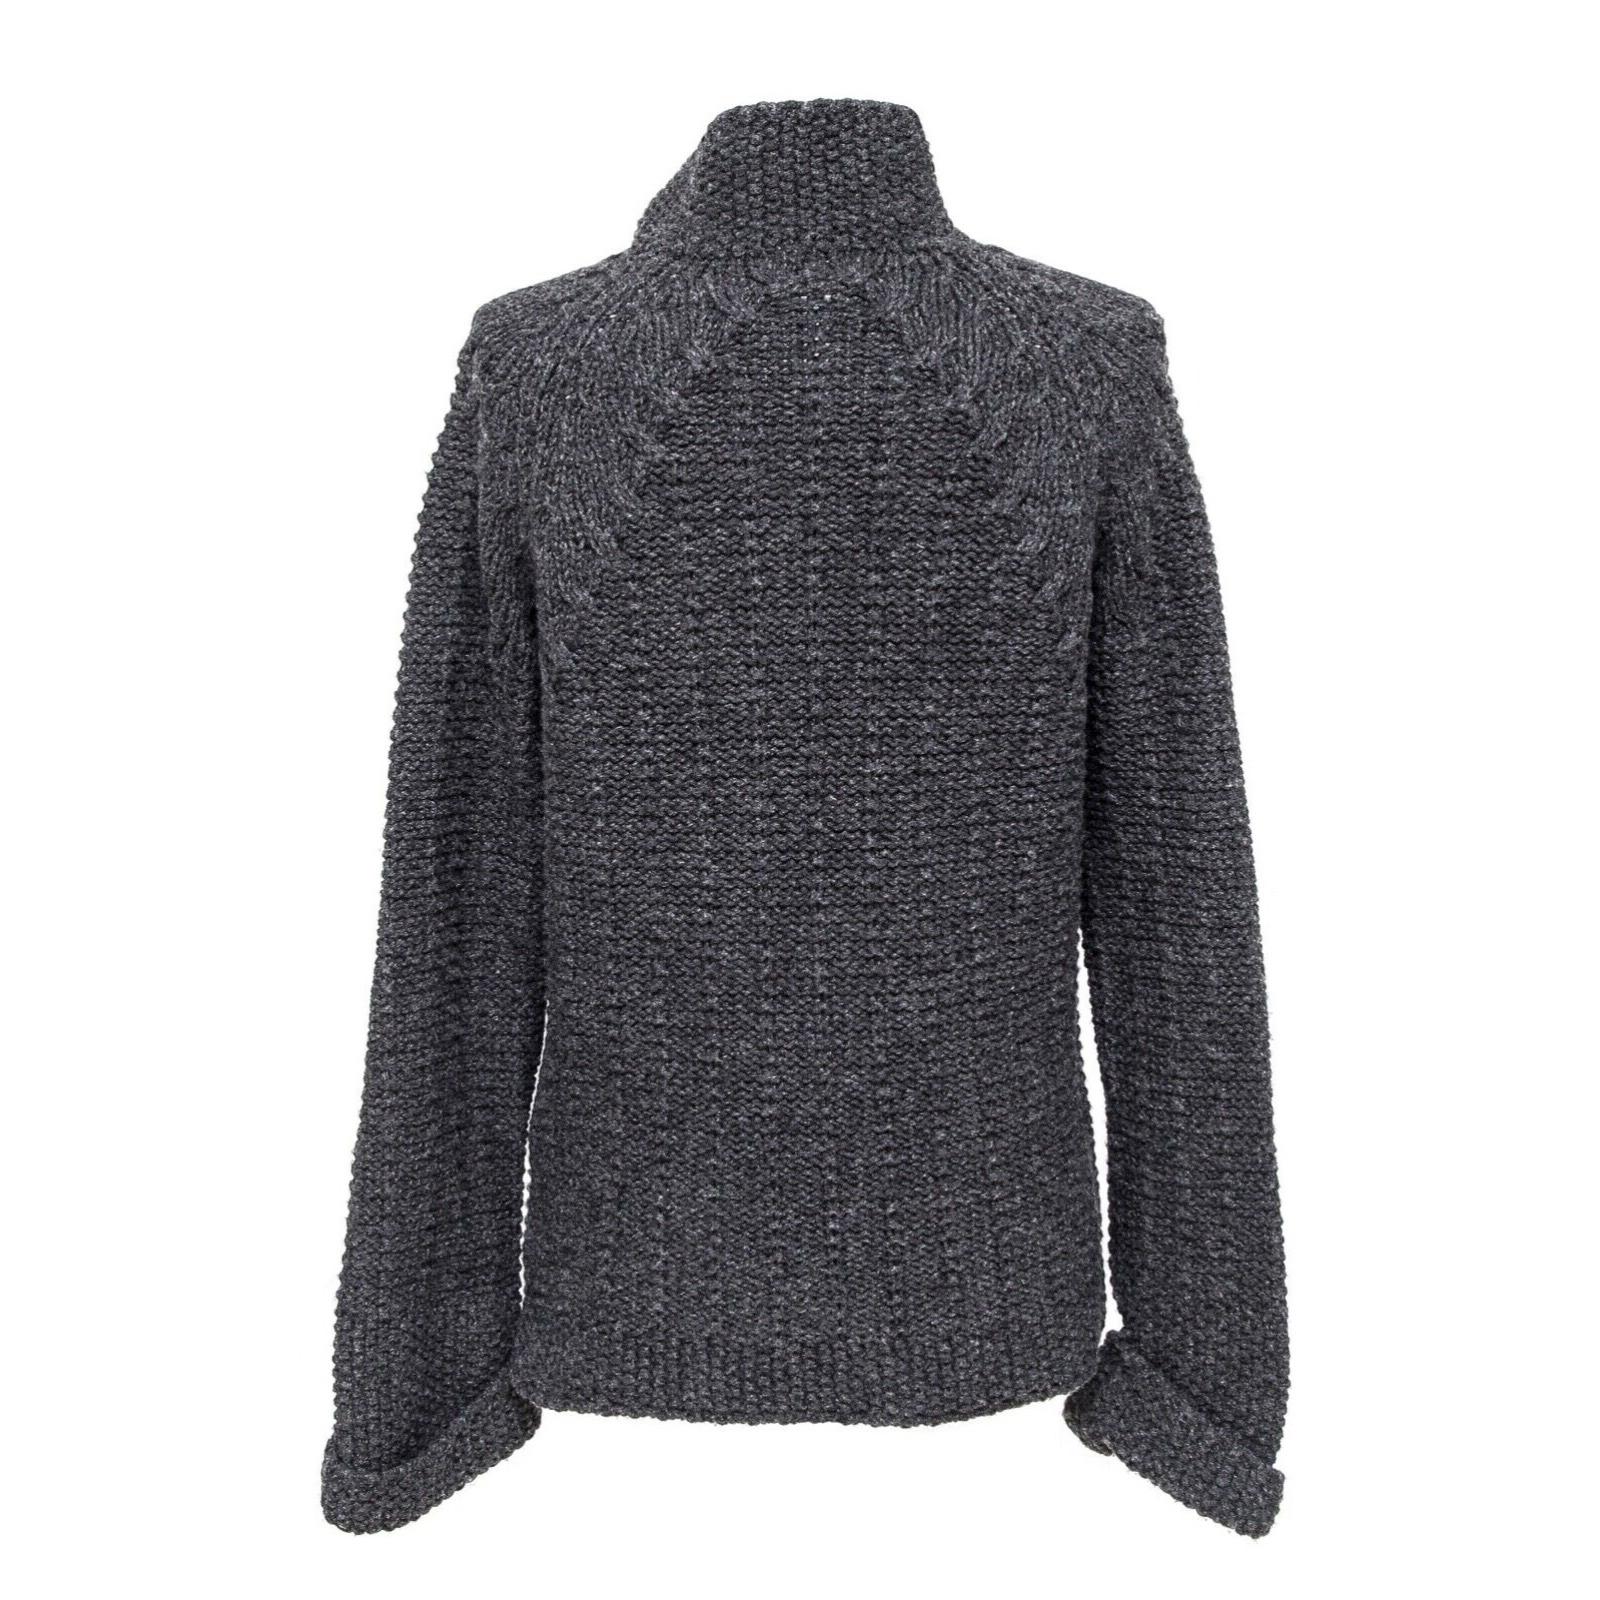 CHLOE Sweater Cardigan Knit Jacket CHARCOAL GREY Long Sleeve Sz XS 2011 For Sale 3